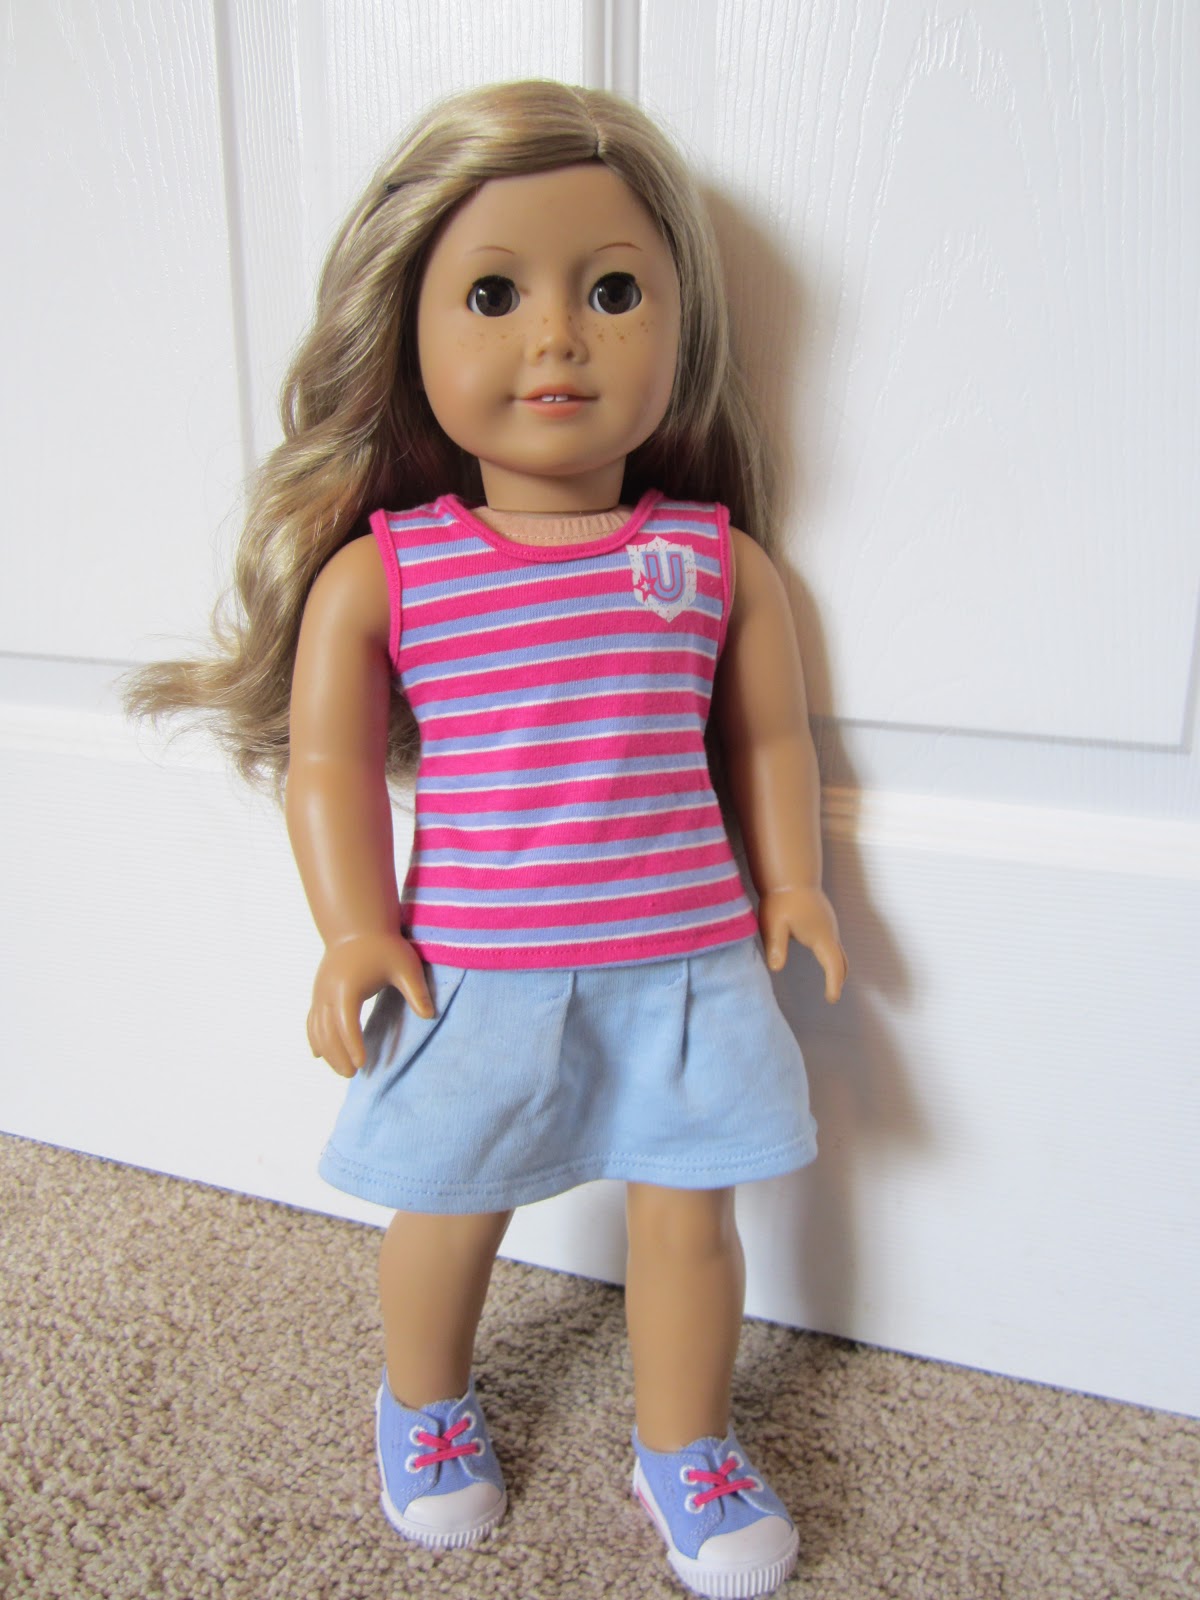 The Dollightful Blog: Meet my dolls